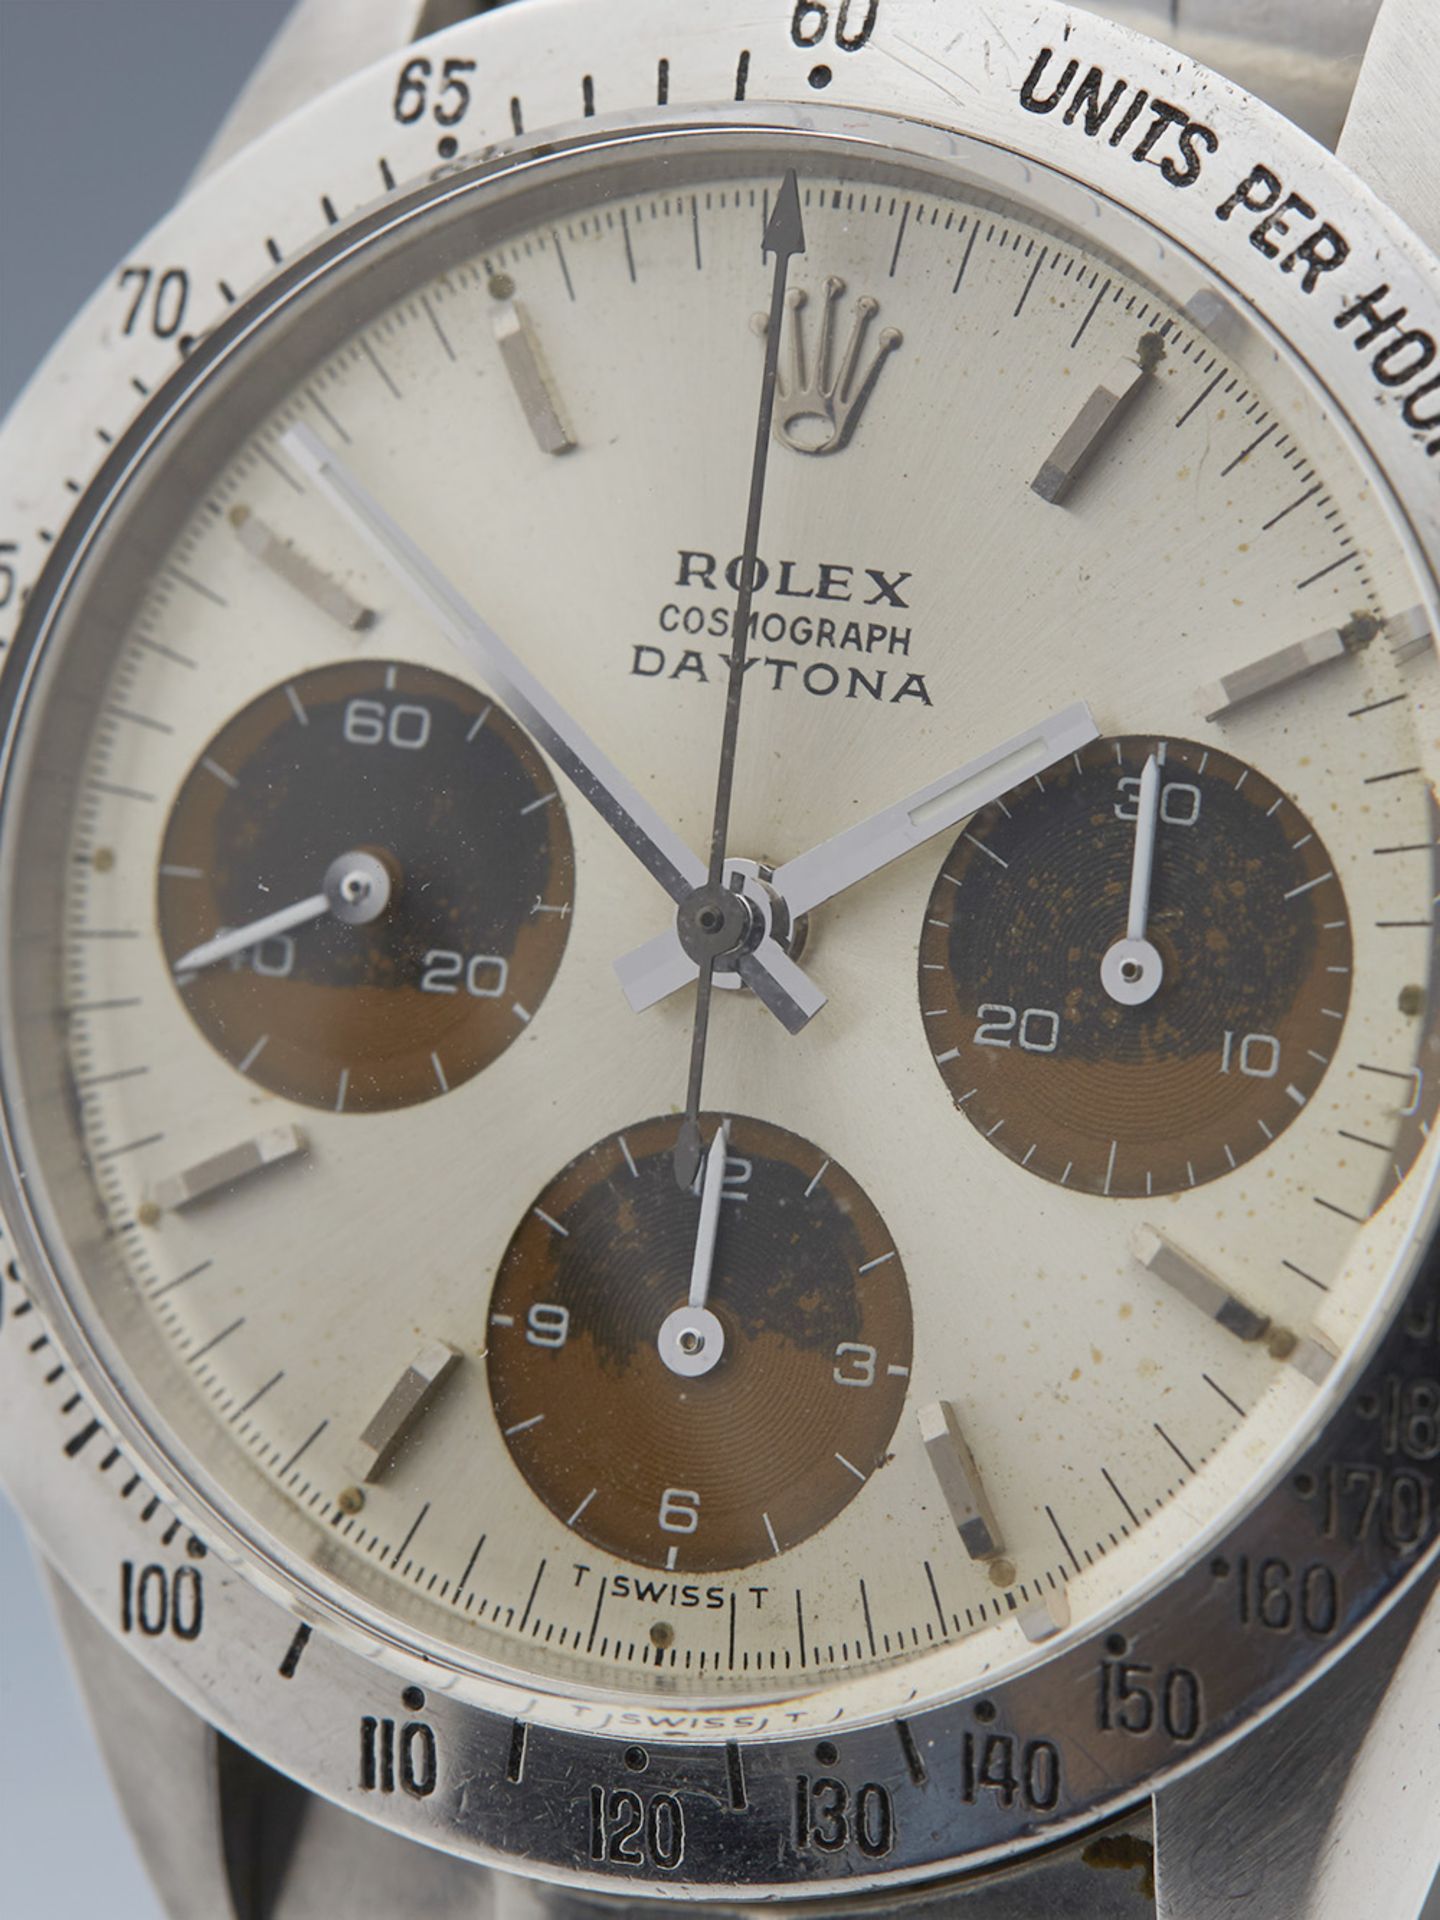 1965 Rolex, Daytona Cosmograph Chronograph Vintage Tropical Dial 6239 - Image 2 of 11